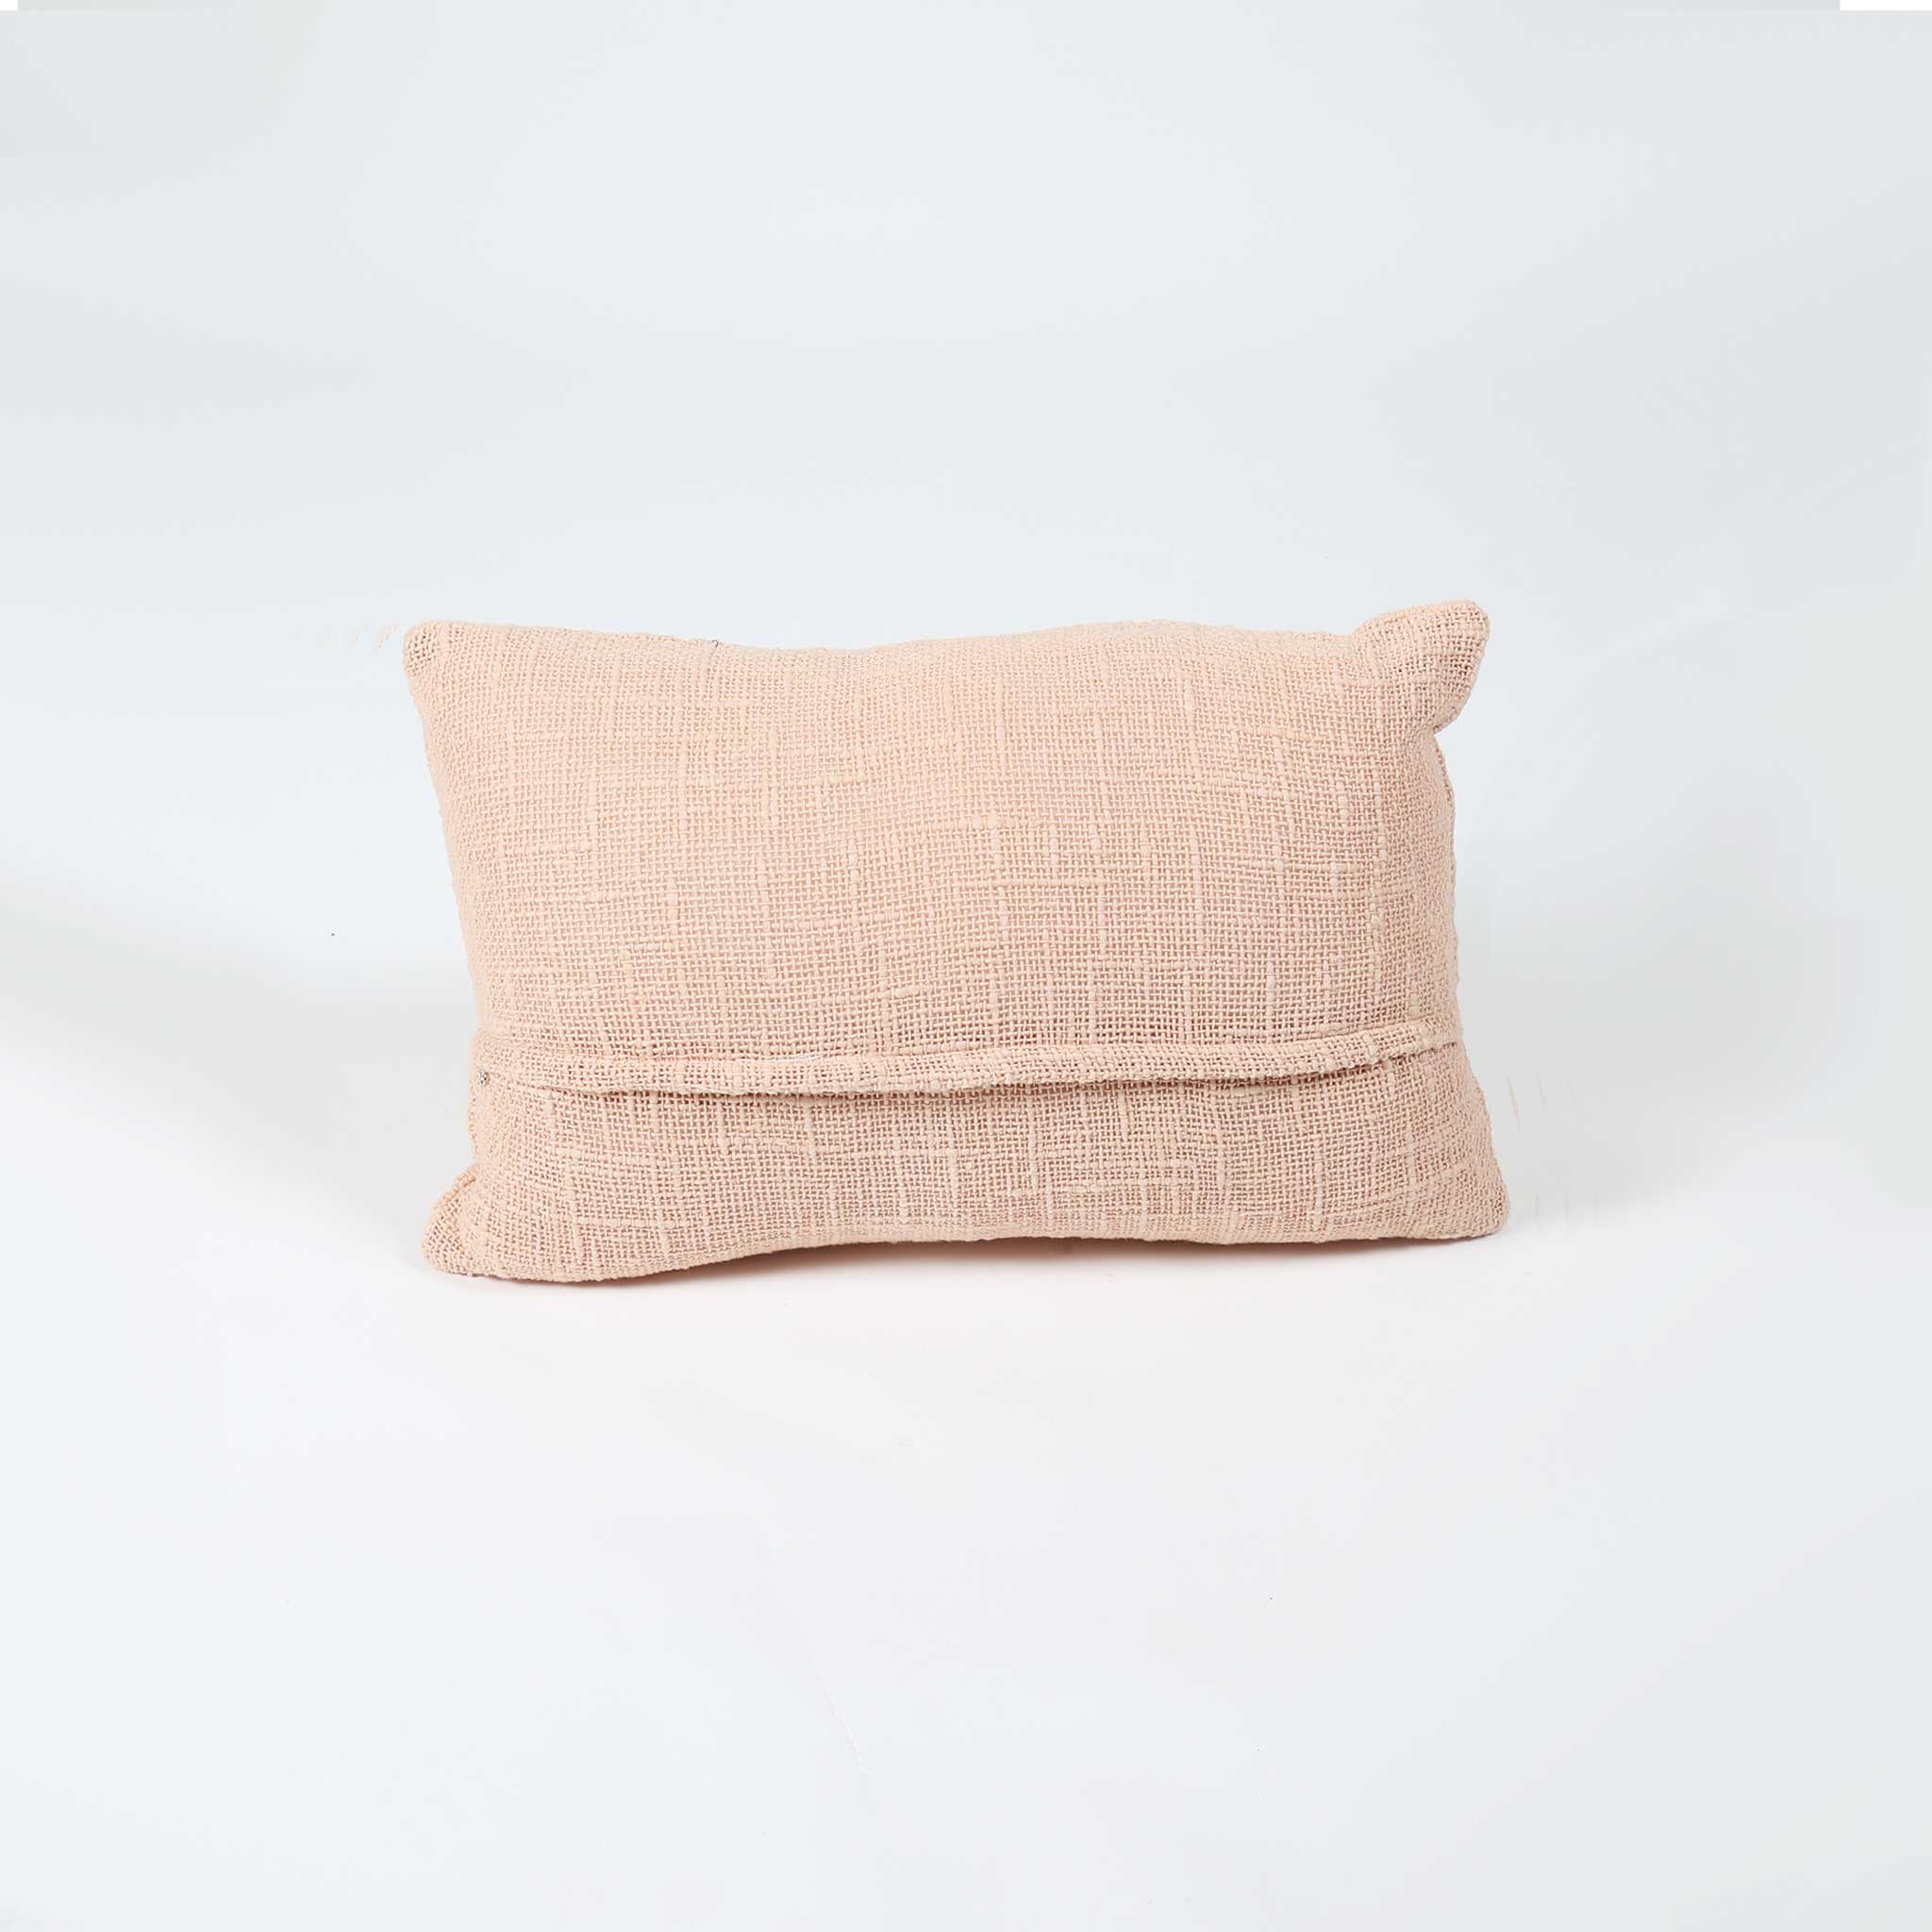 Blush Pink Cotton Cushion Cover with Cross Pattern Stitching